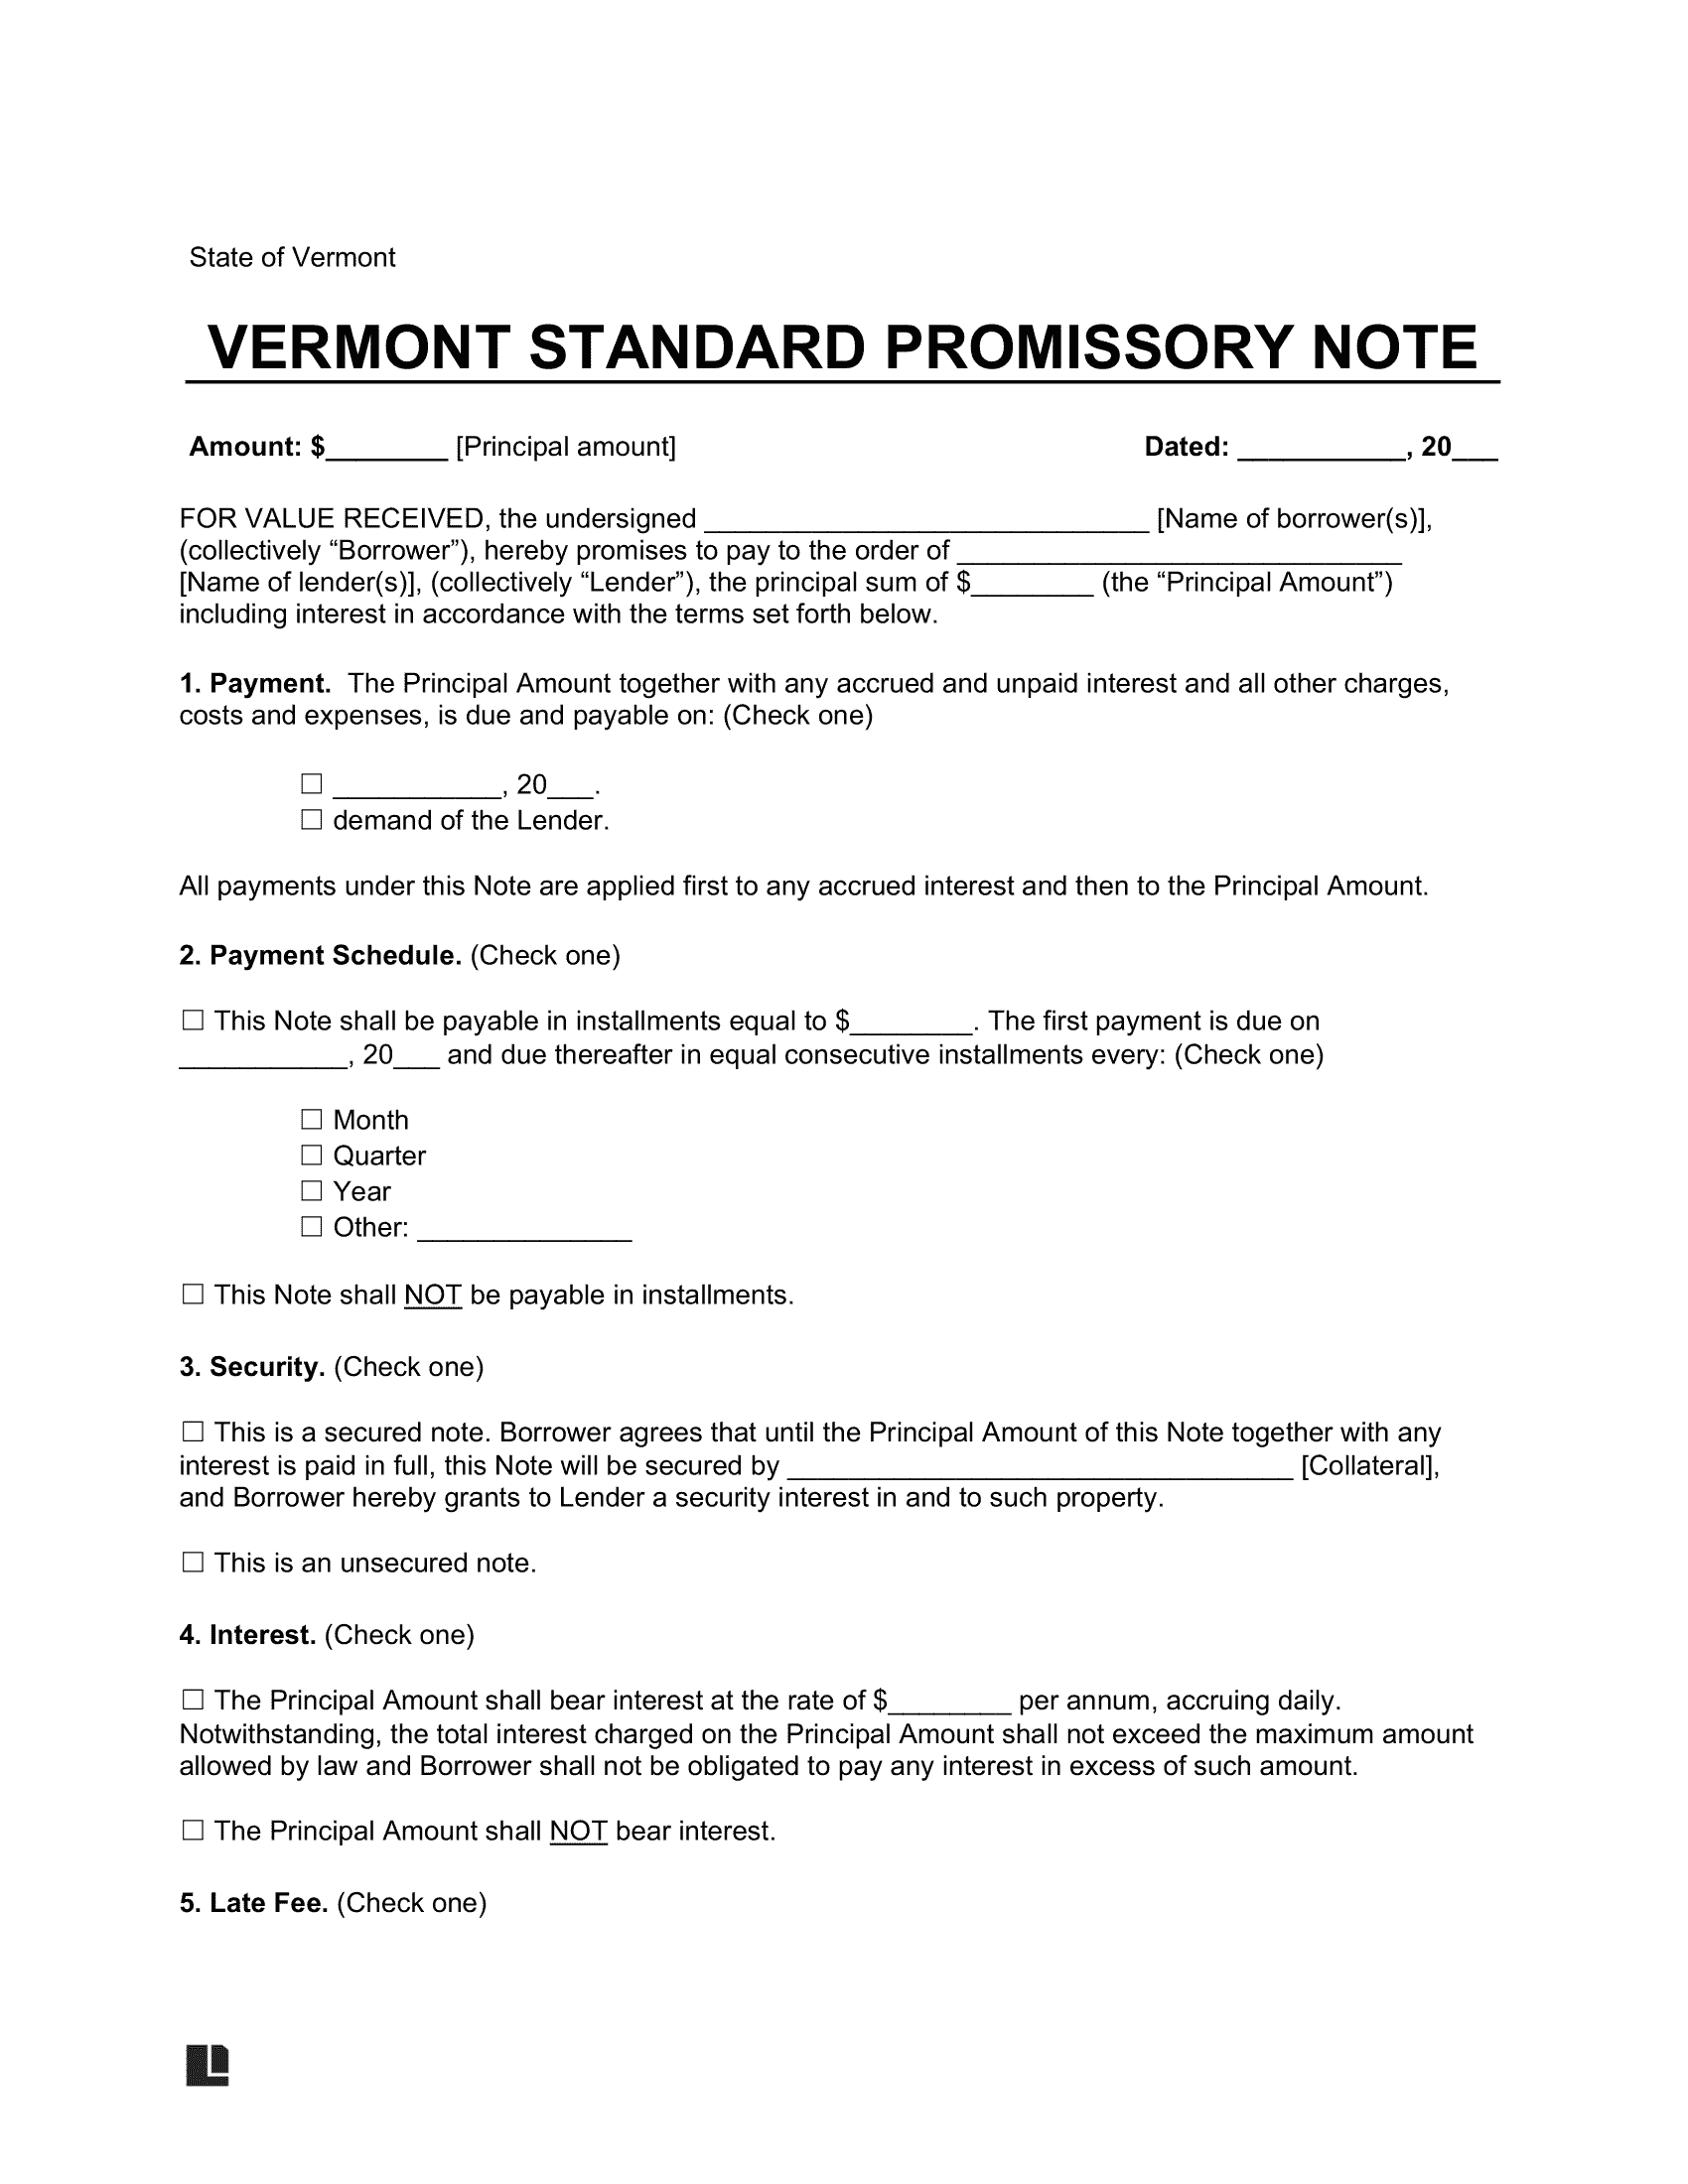 Vermont Standard Promissory Note Template